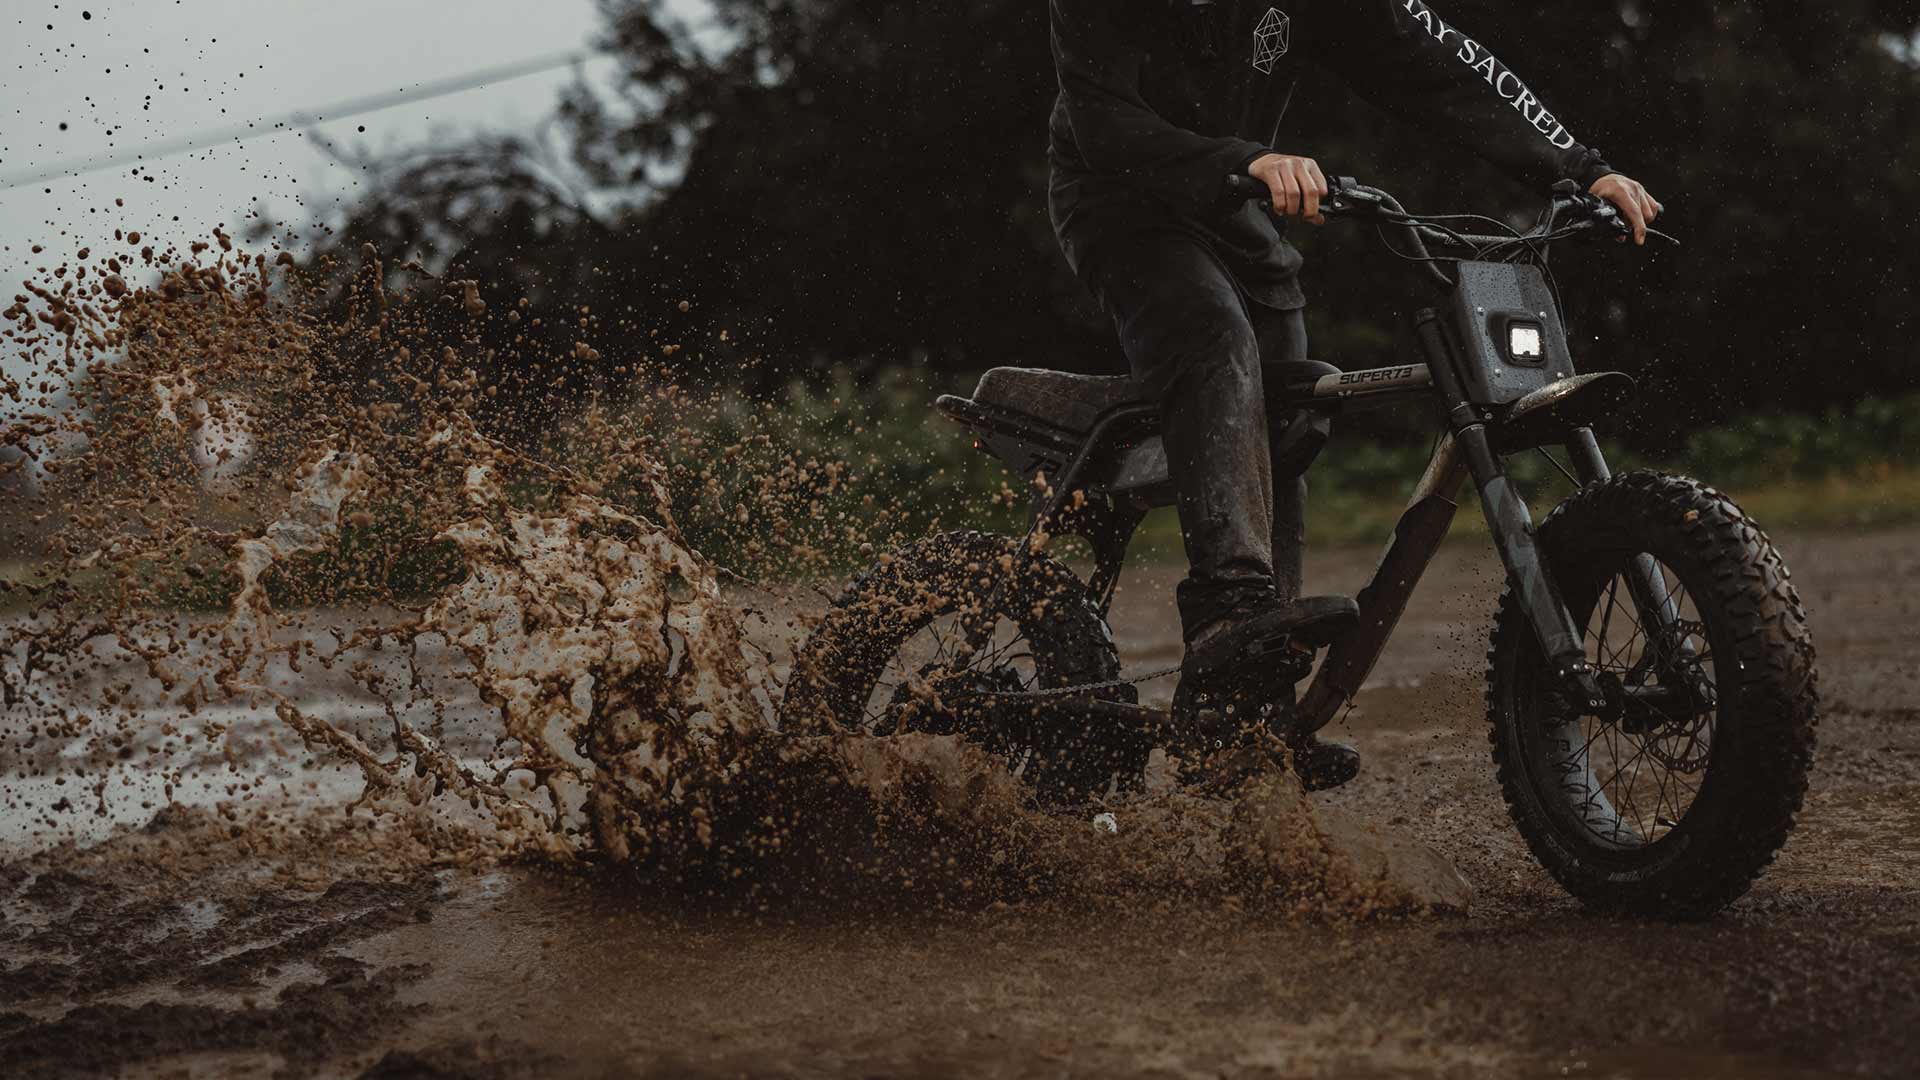 A rider on a Super73 Adventure Series ebike riding through the mud